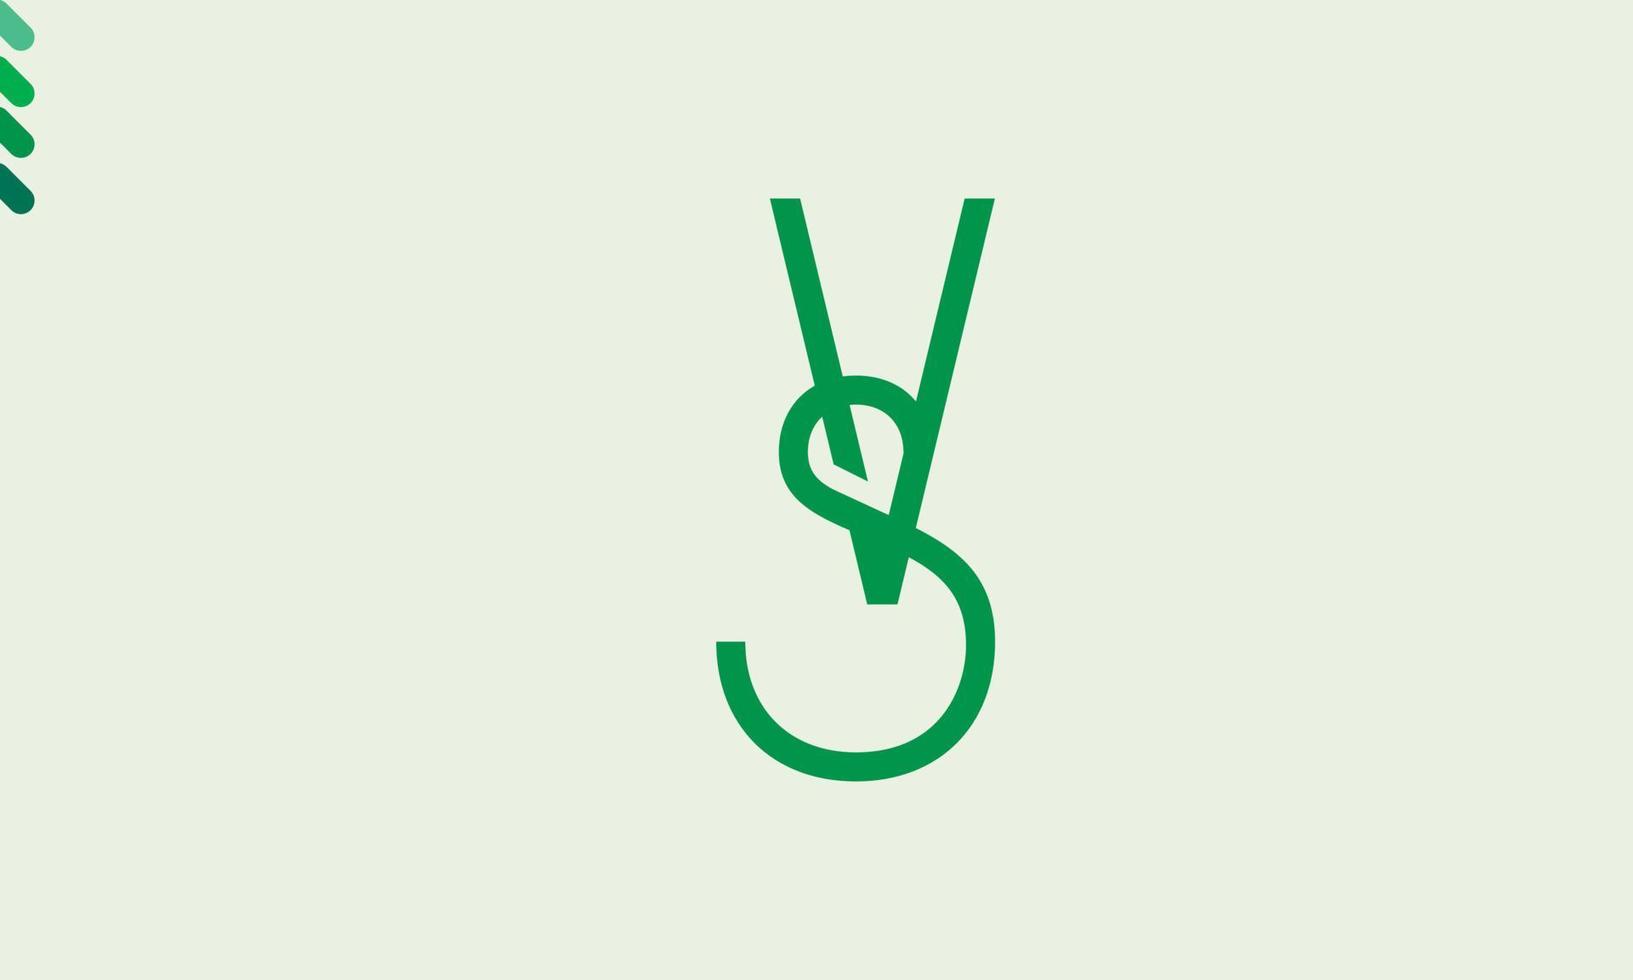 alfabet letters initialen monogram logo vs, sv, v en s vector